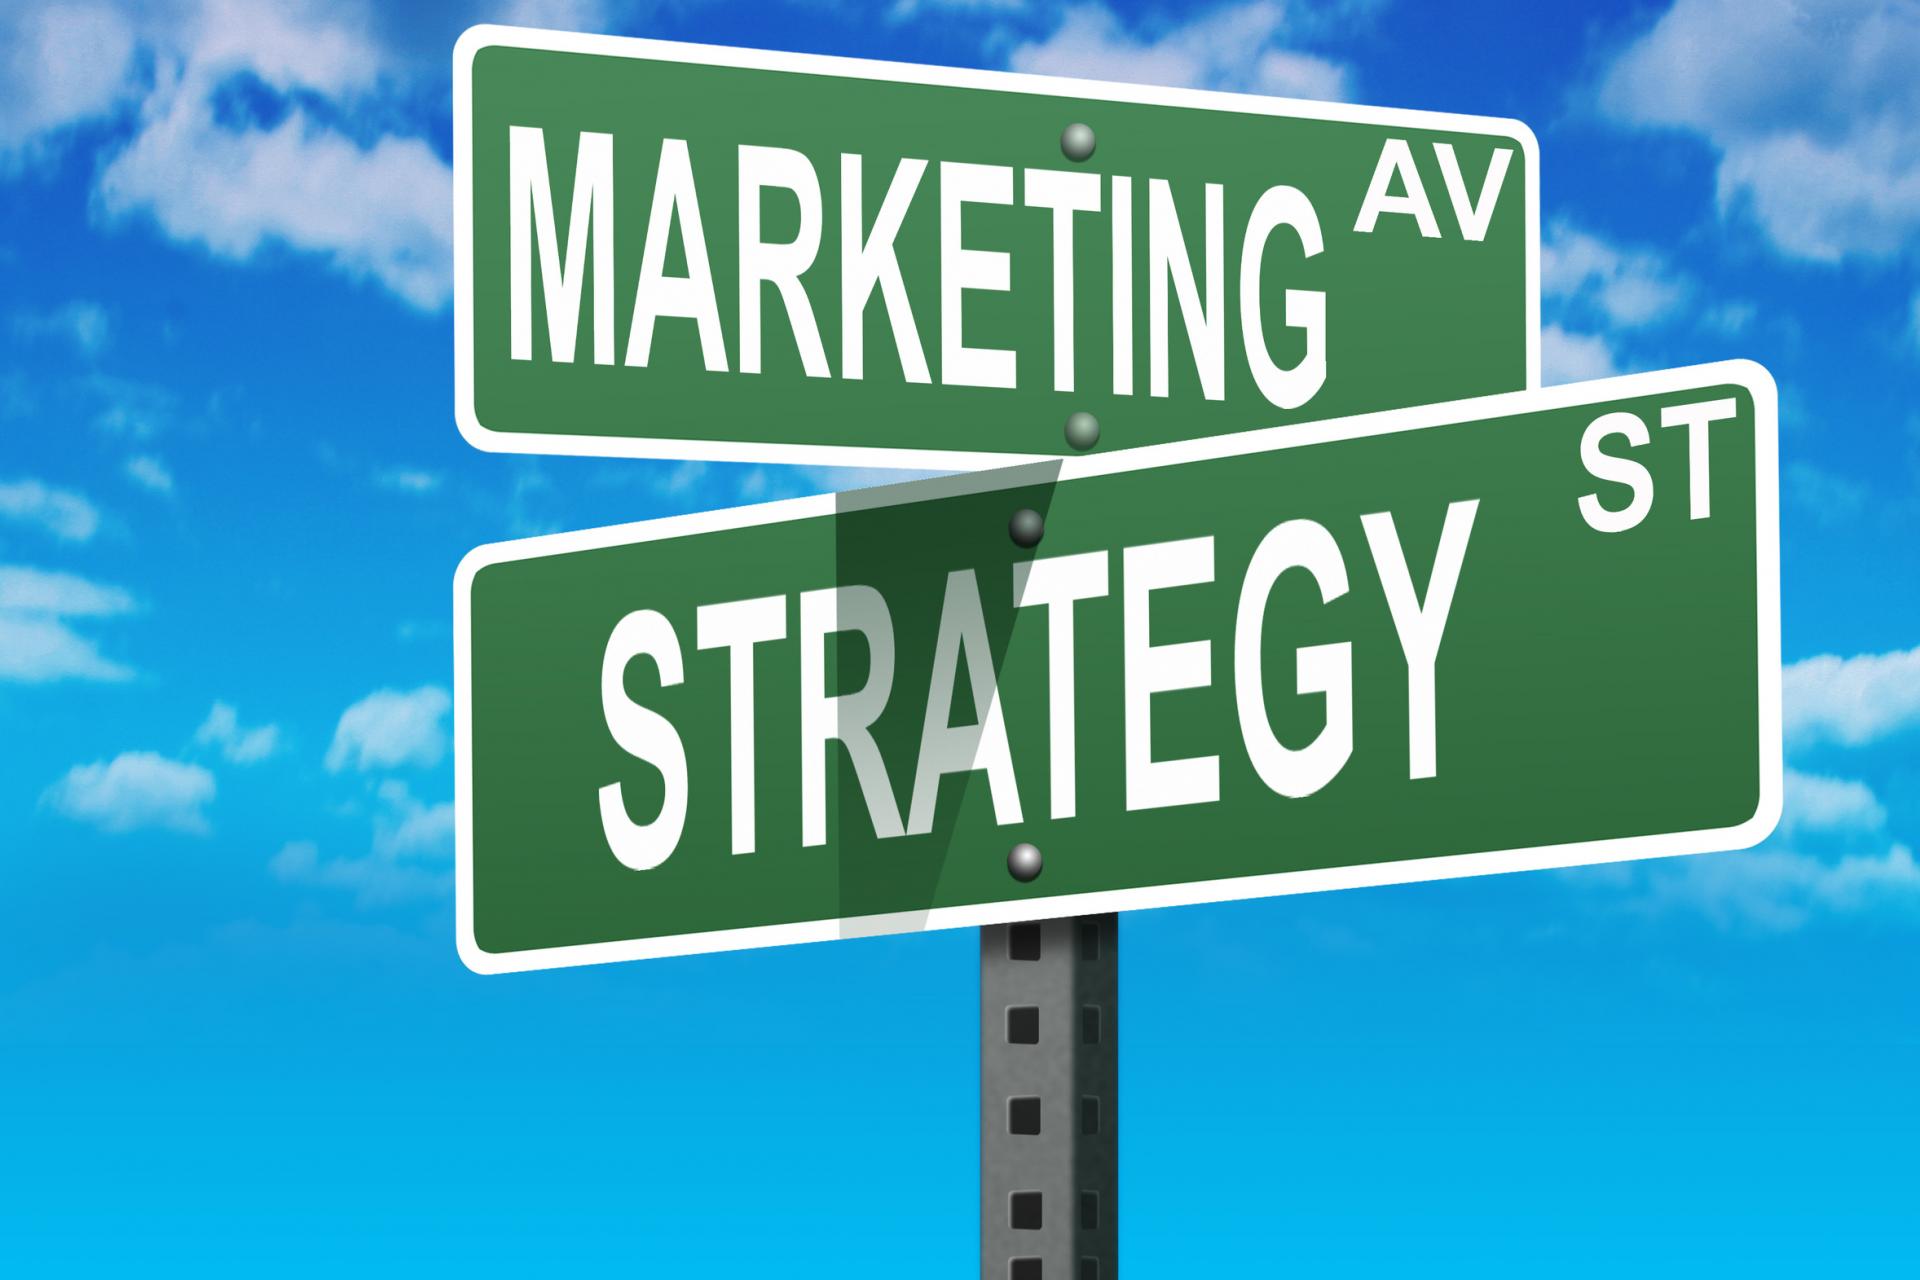 Marketing follows Strategy